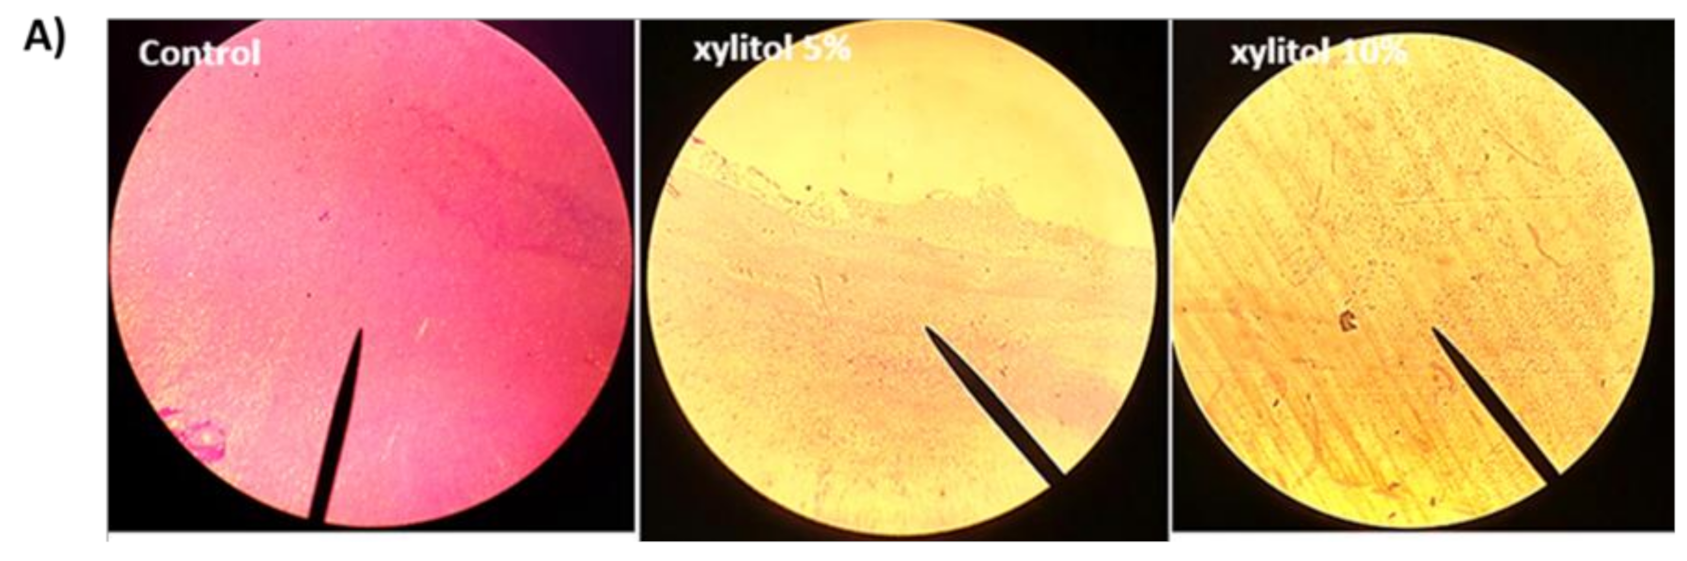 xylitol dysbiosis